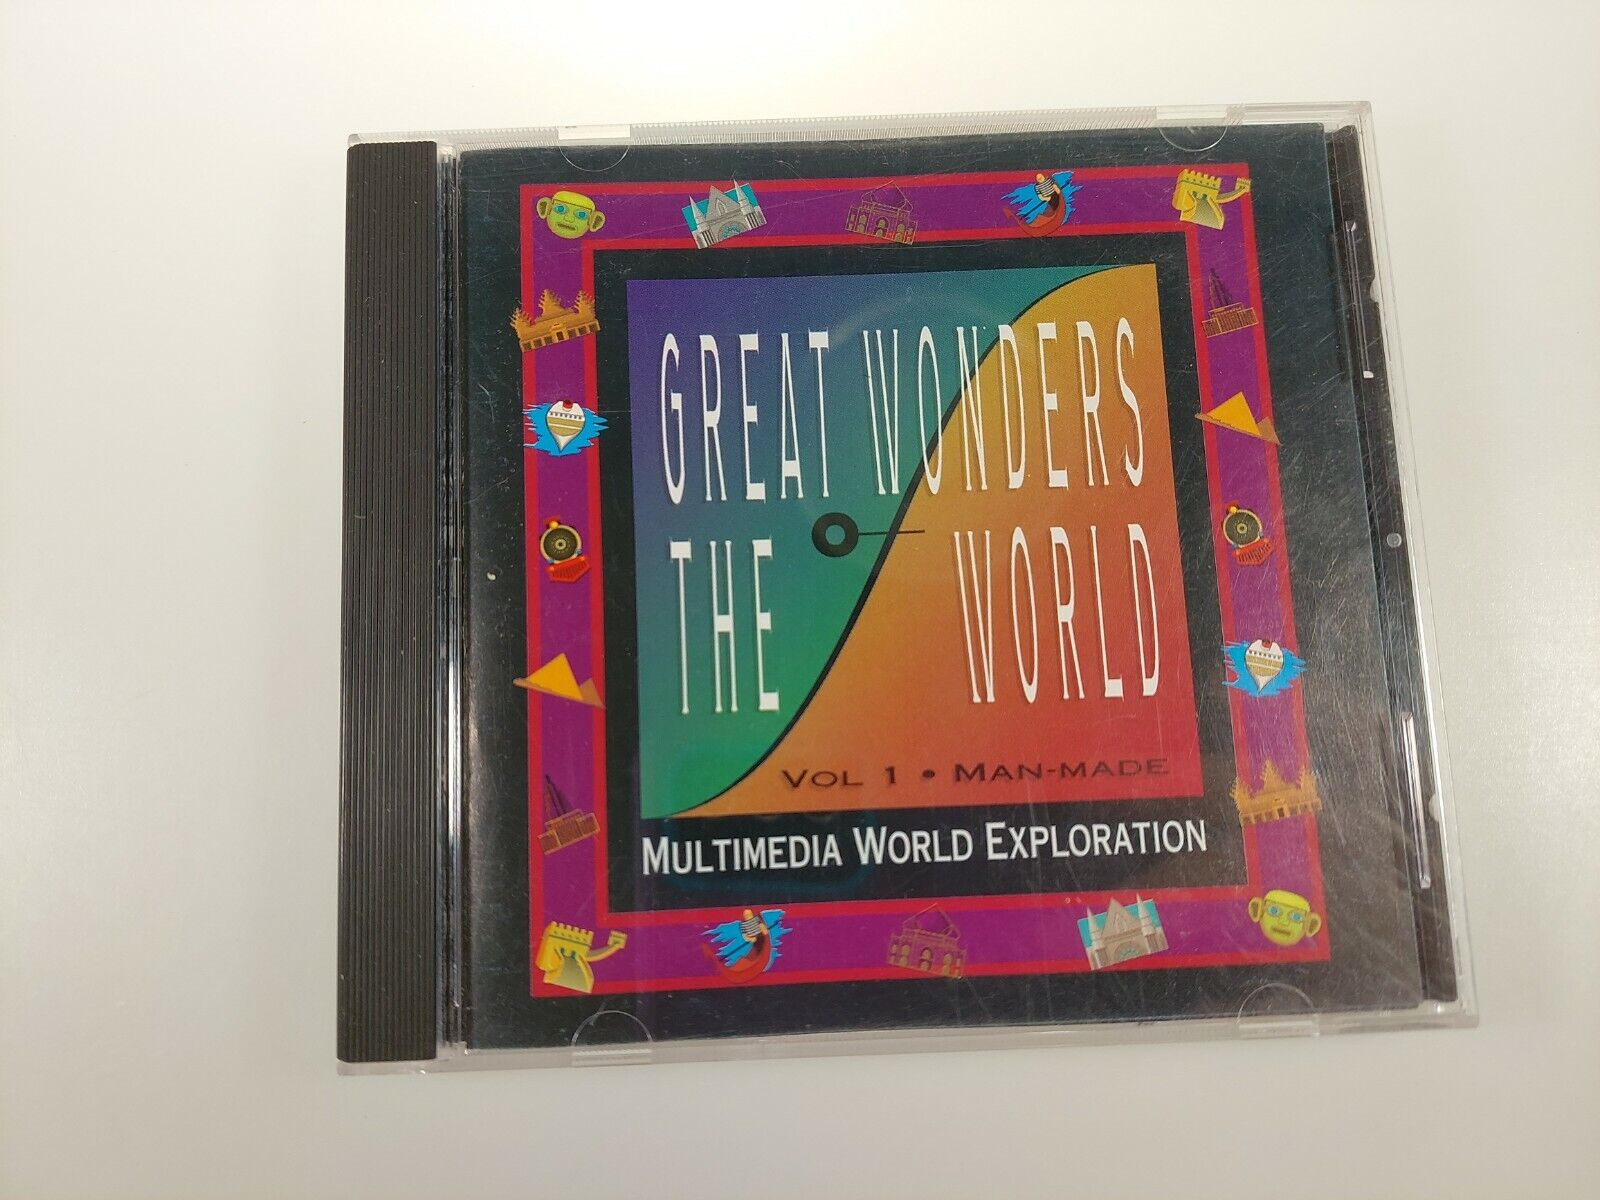 Great Wonders of the World  PC CD-ROM 1992 WIN Version Volume 1  